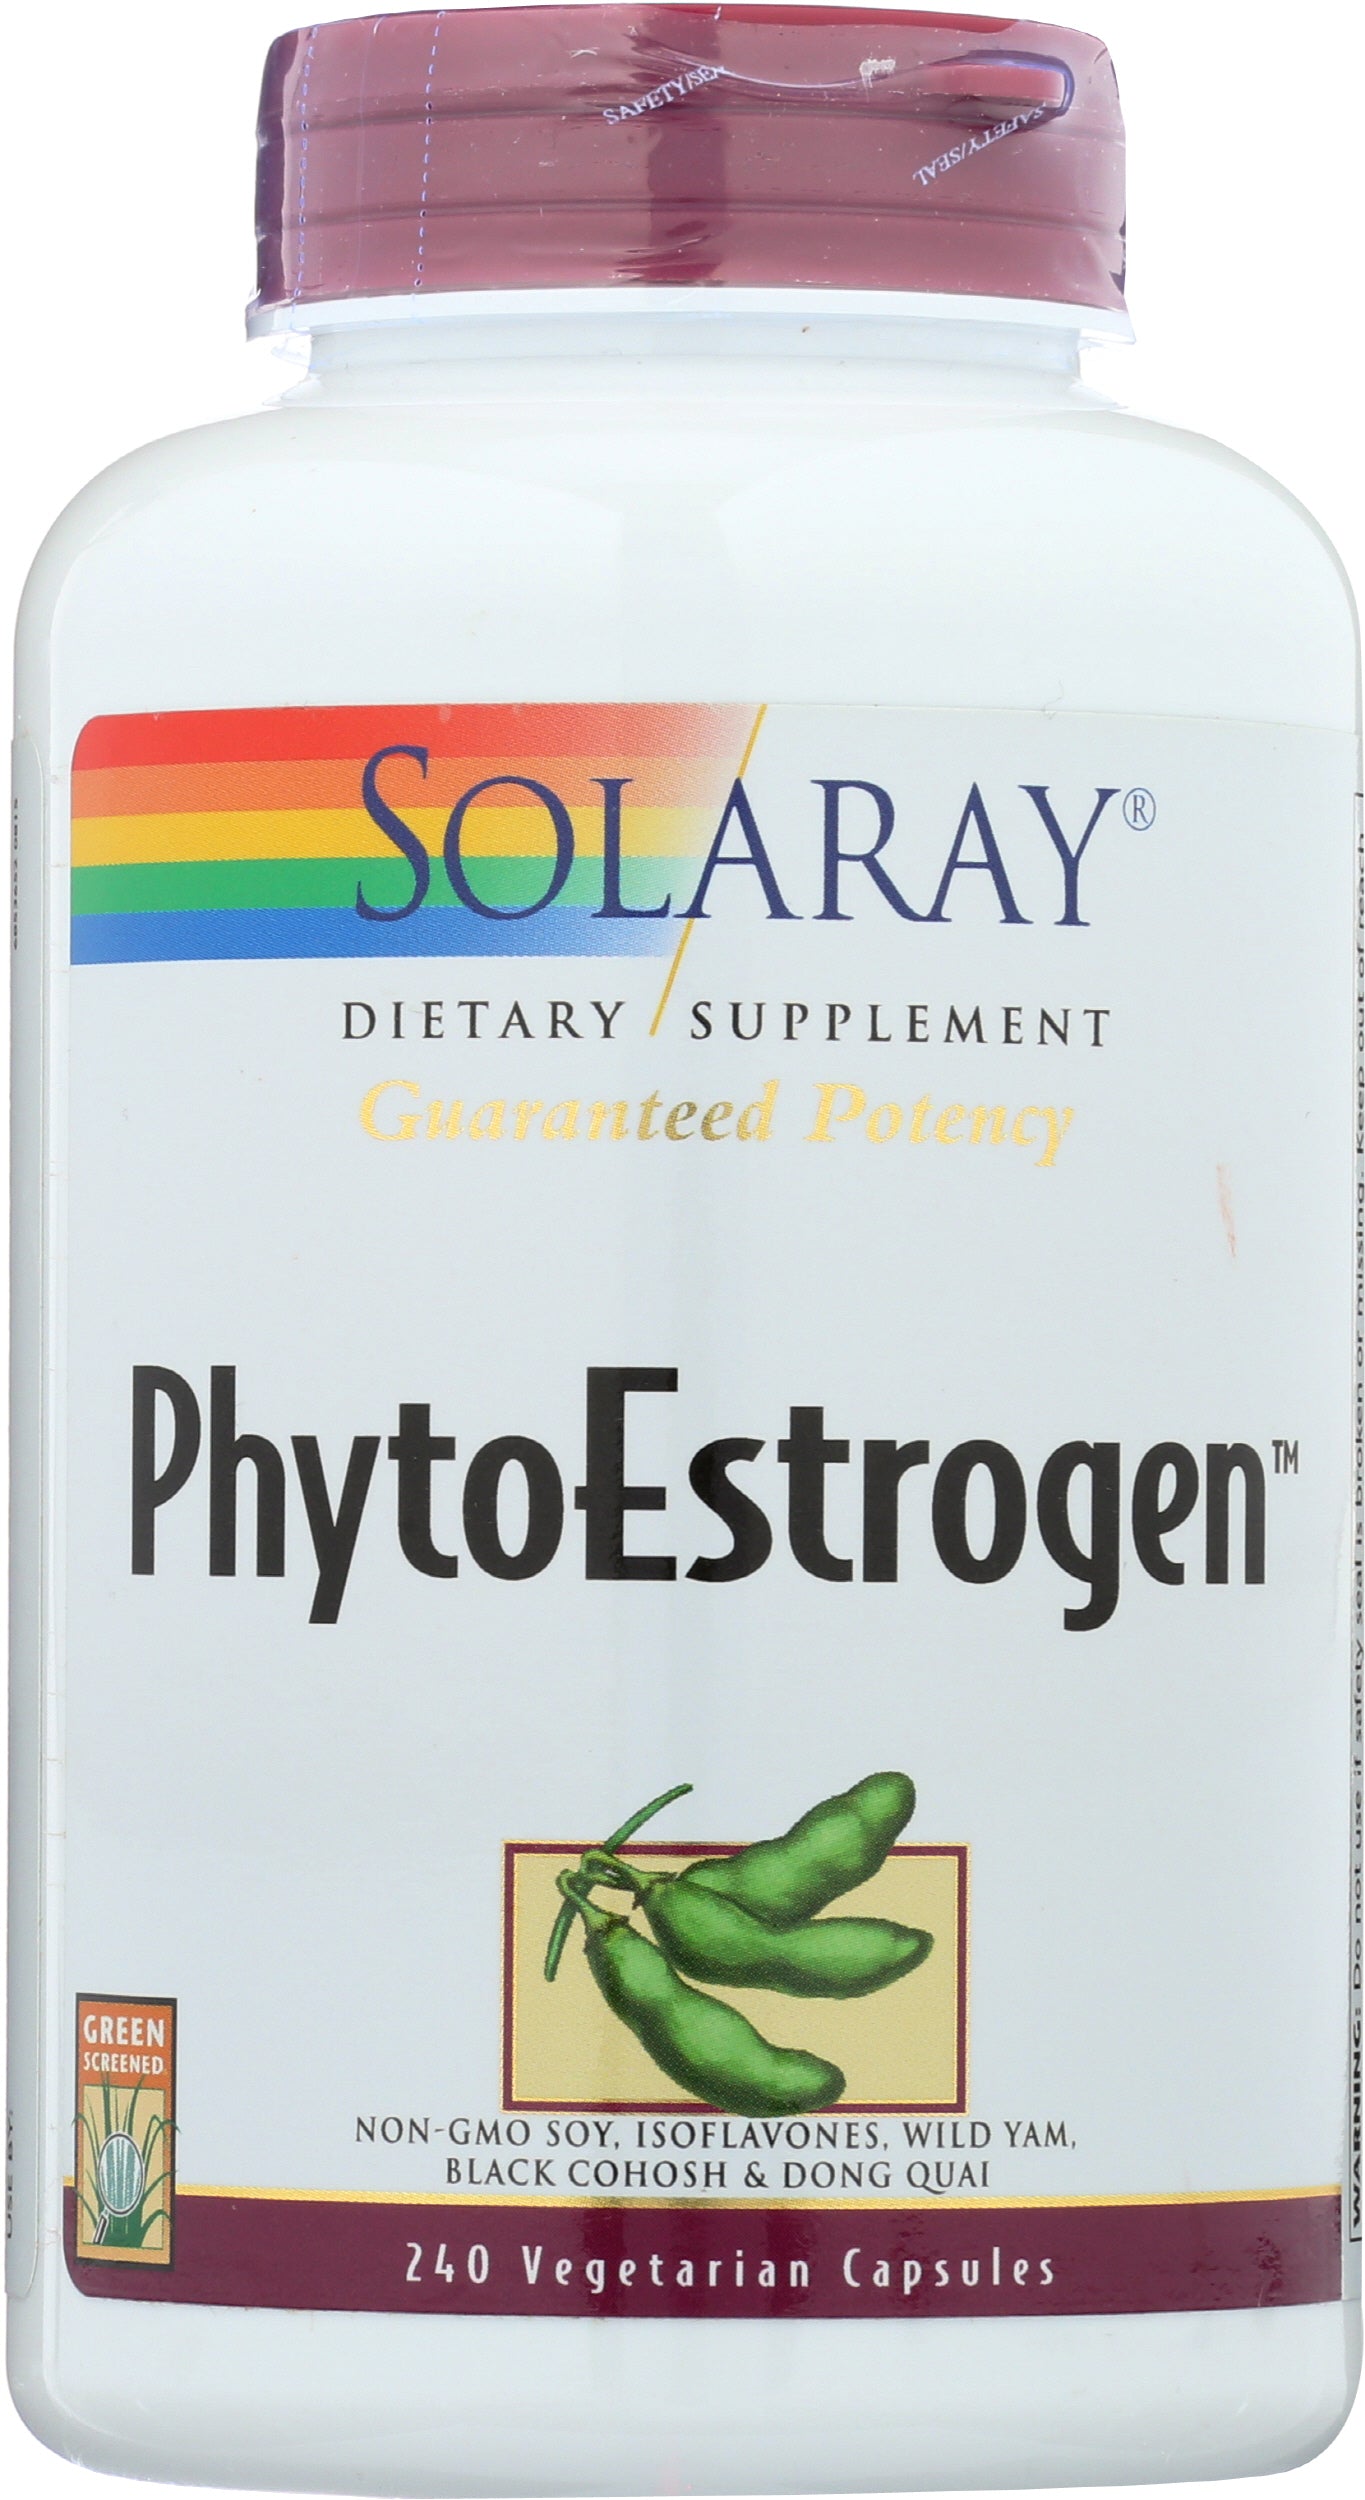 Solaray PhytoEstrogen 240 Vegetarian Capsules Front